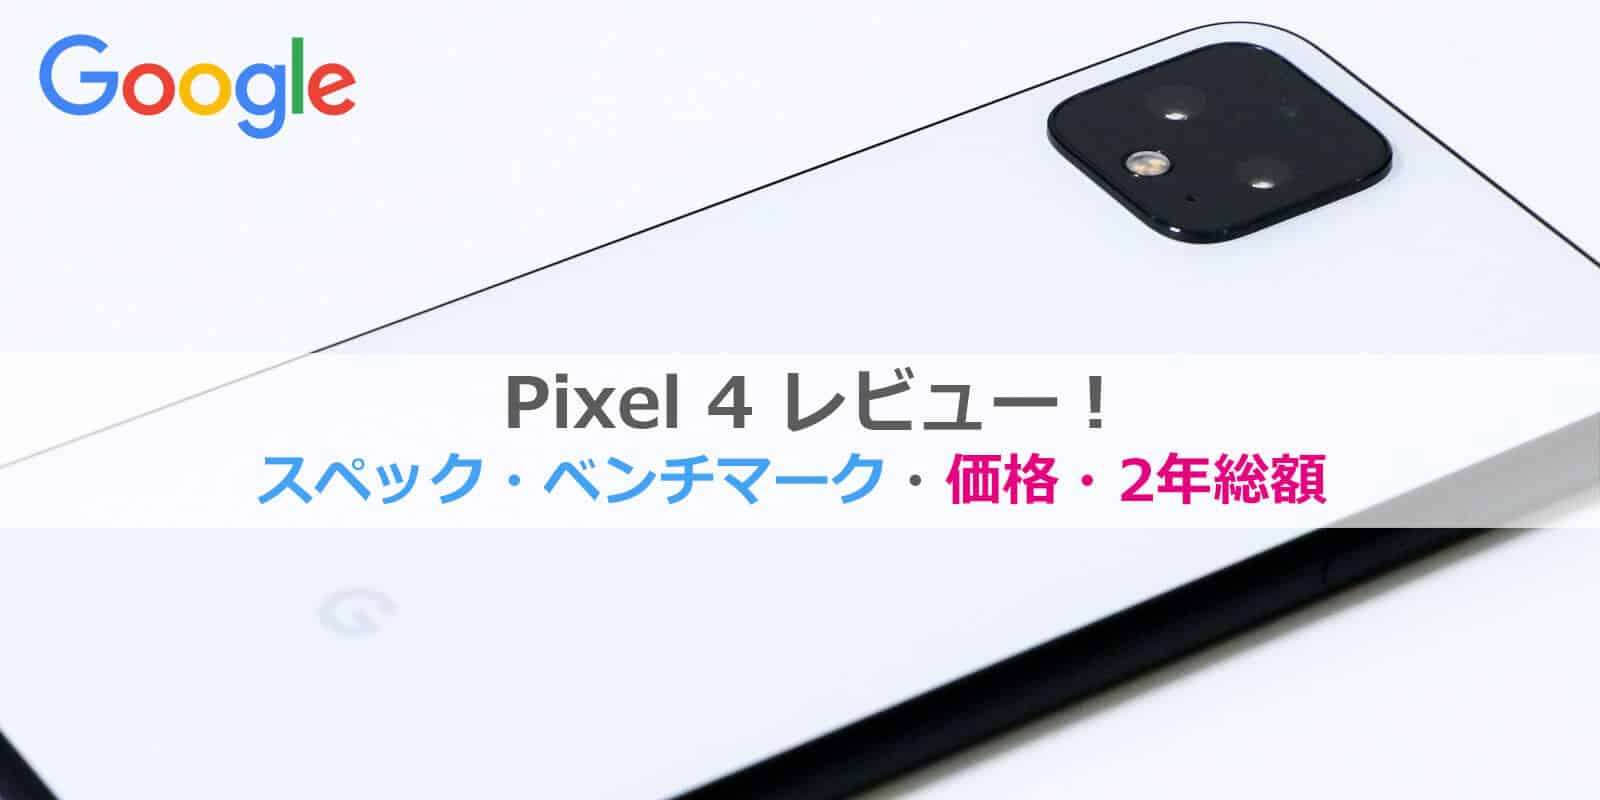 Pixel 4 / XLレビュー│キャリア別2年総額比較・スペック・ベンチマーク